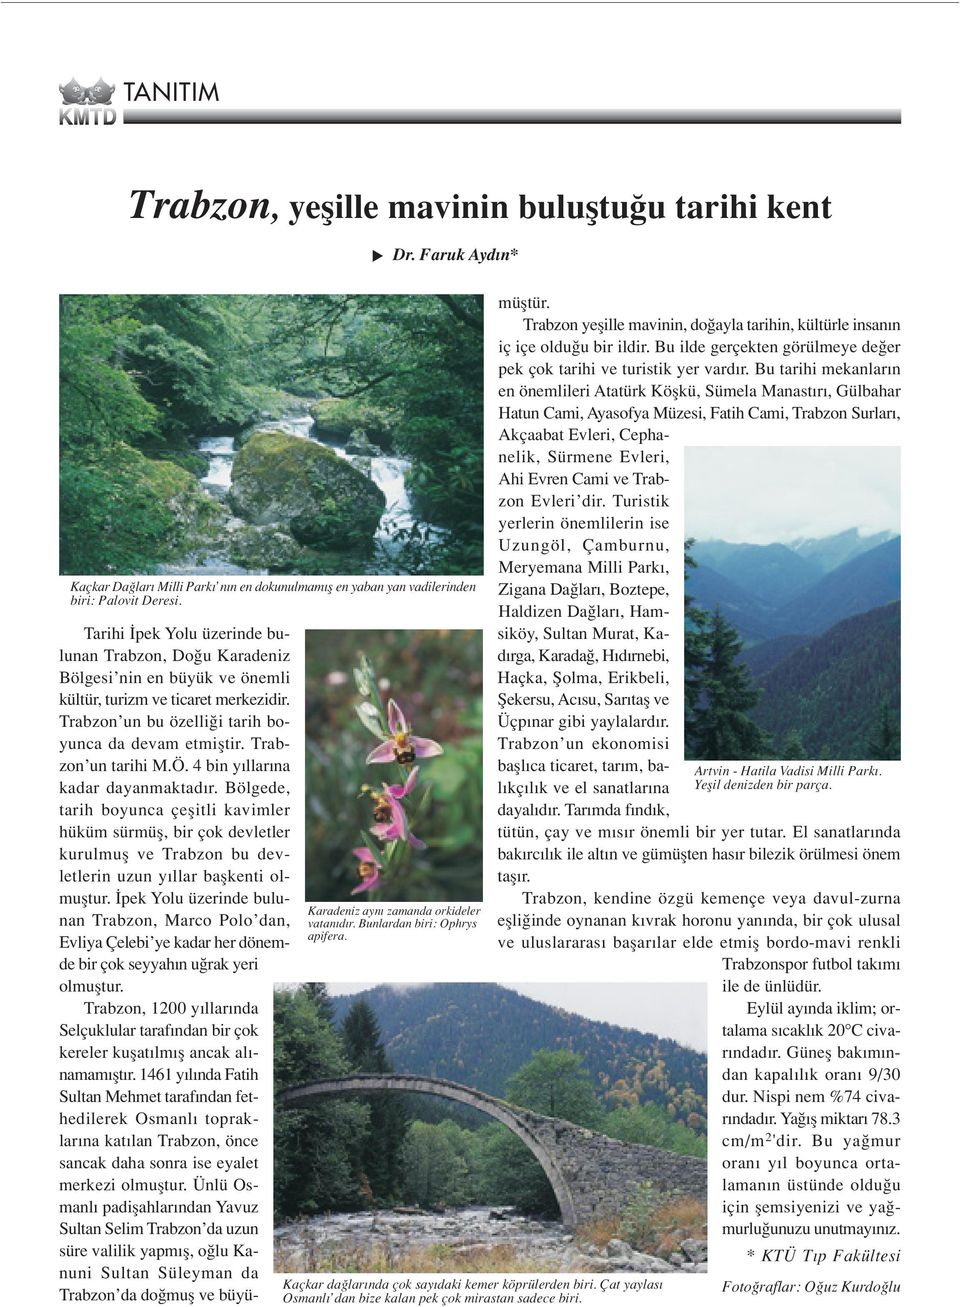 Trabzon un bu özelli i tarih boyuna da devam etmifltir. Trabzon un tarihi M.Ö. 4 bin y llar na kadar dayanmaktad r.